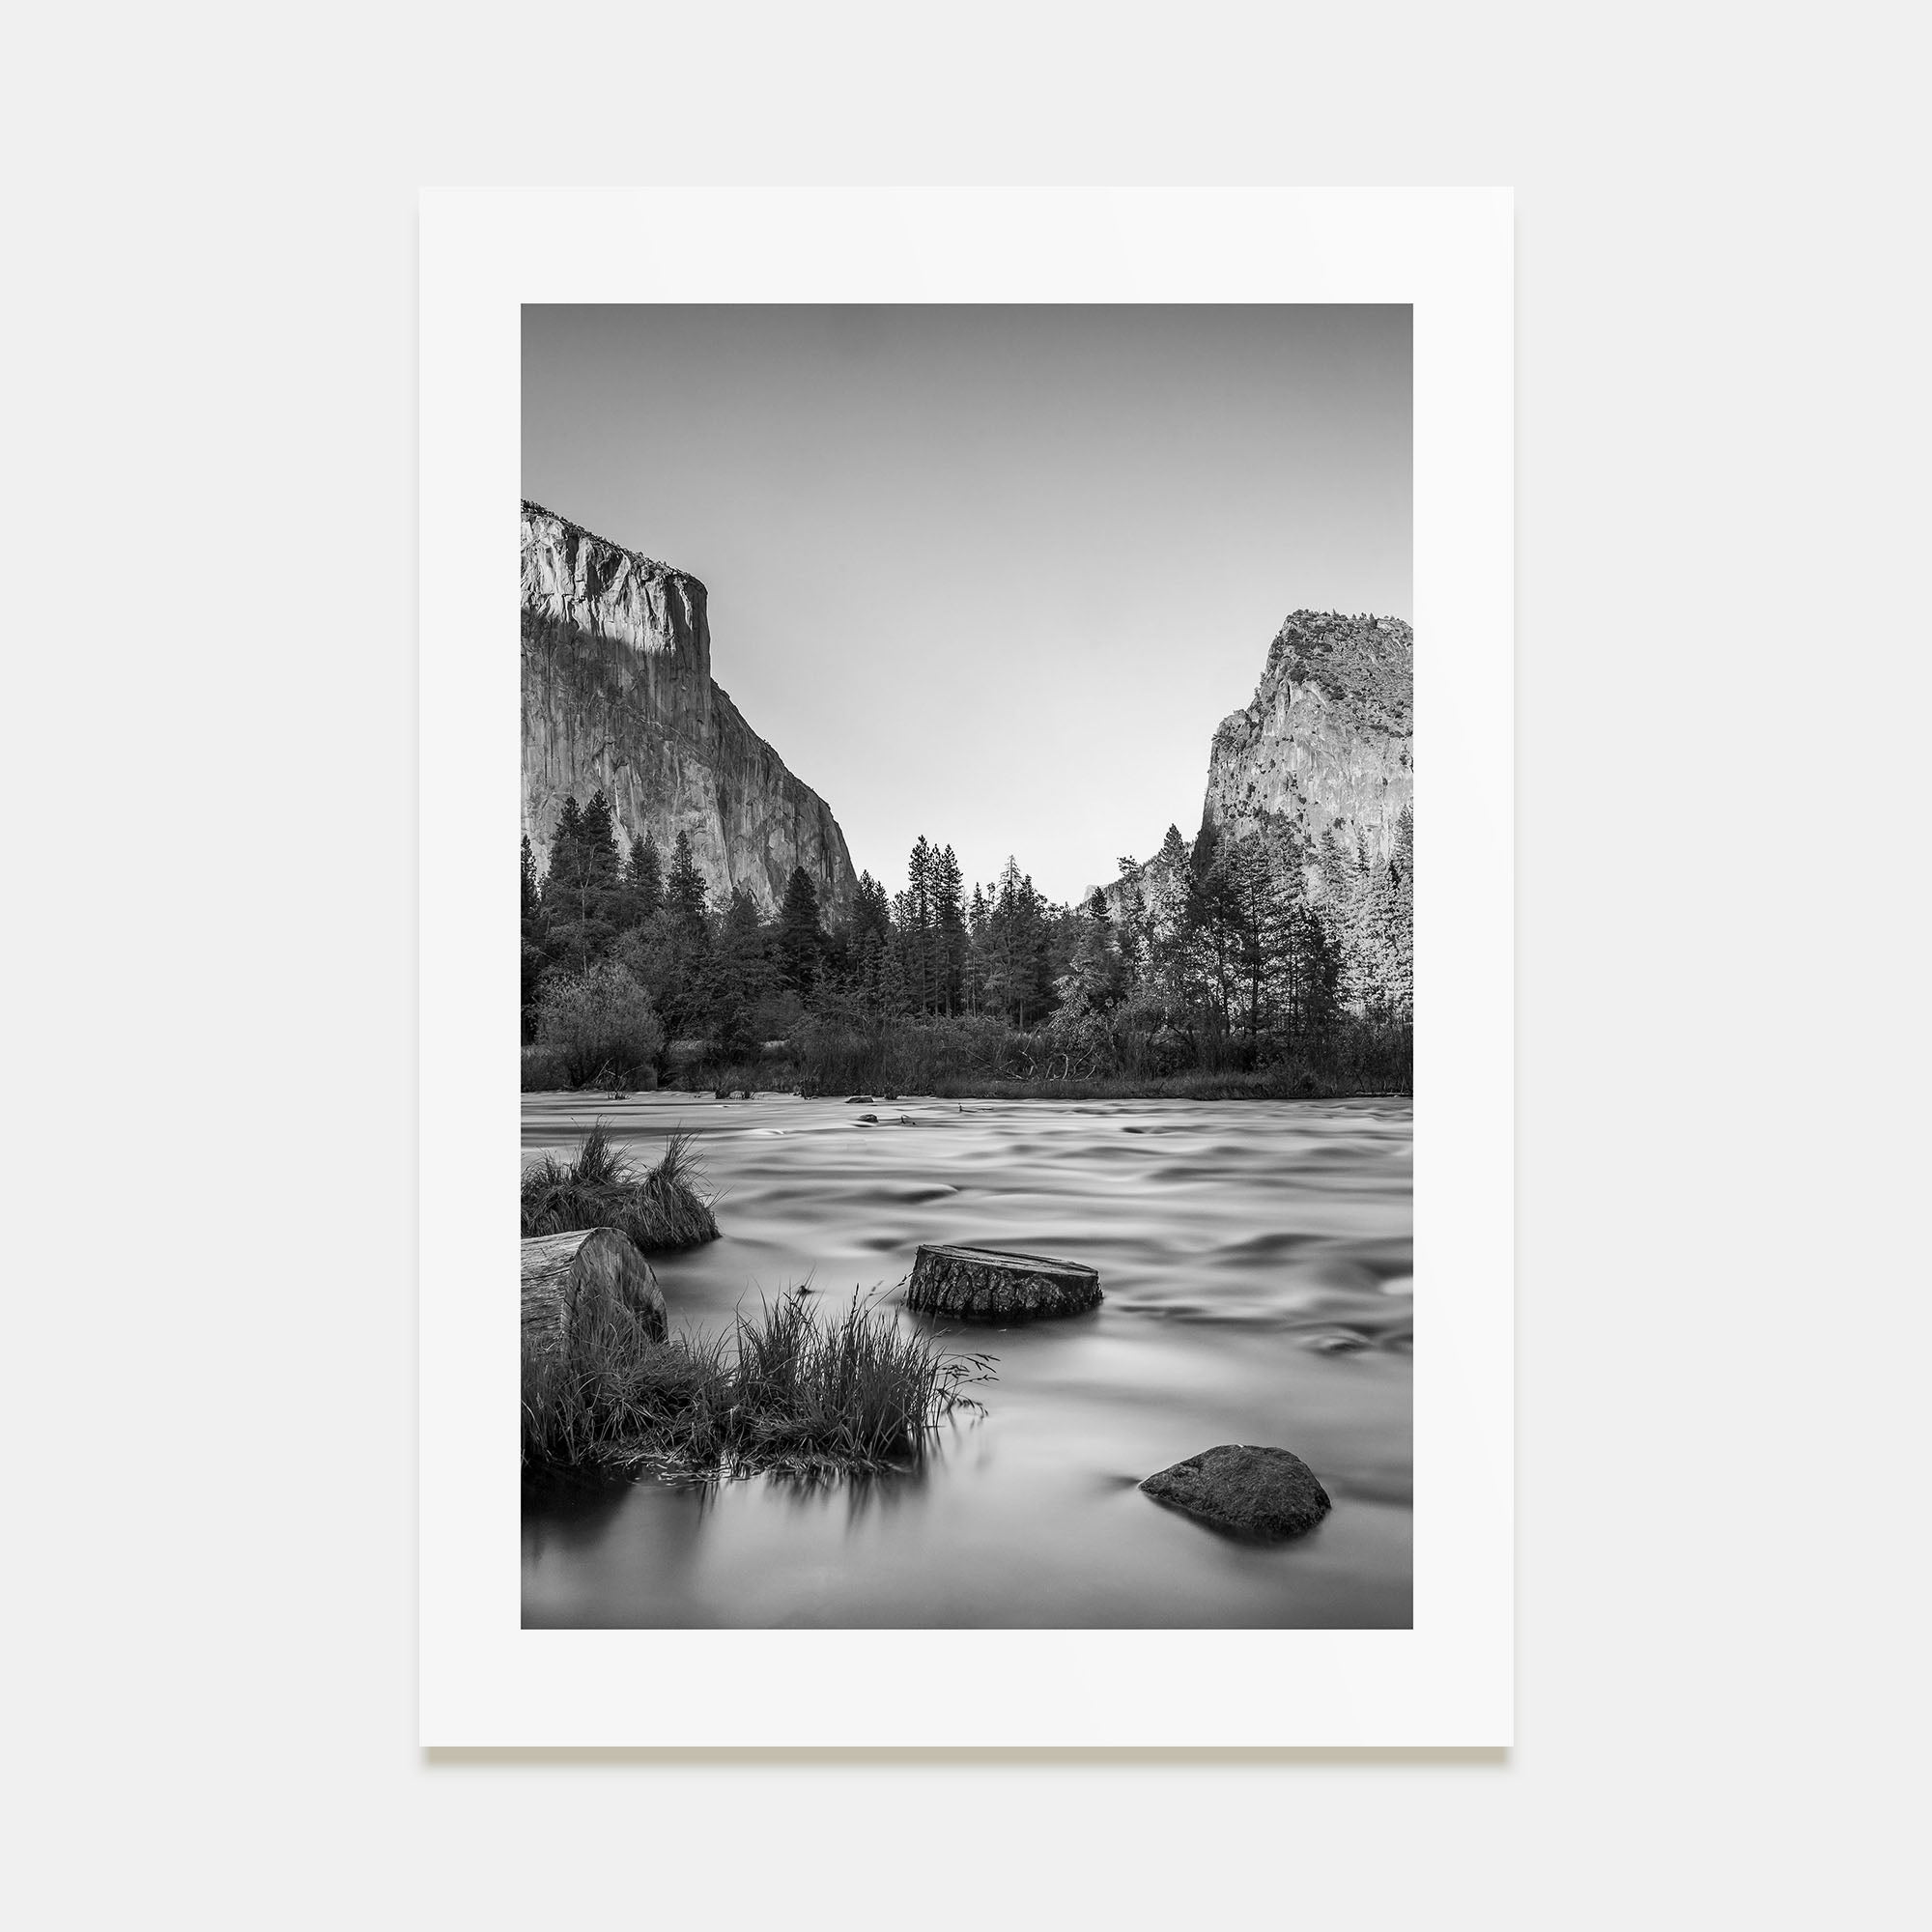 Yosemite National Park Photo B&W No 2 Poster